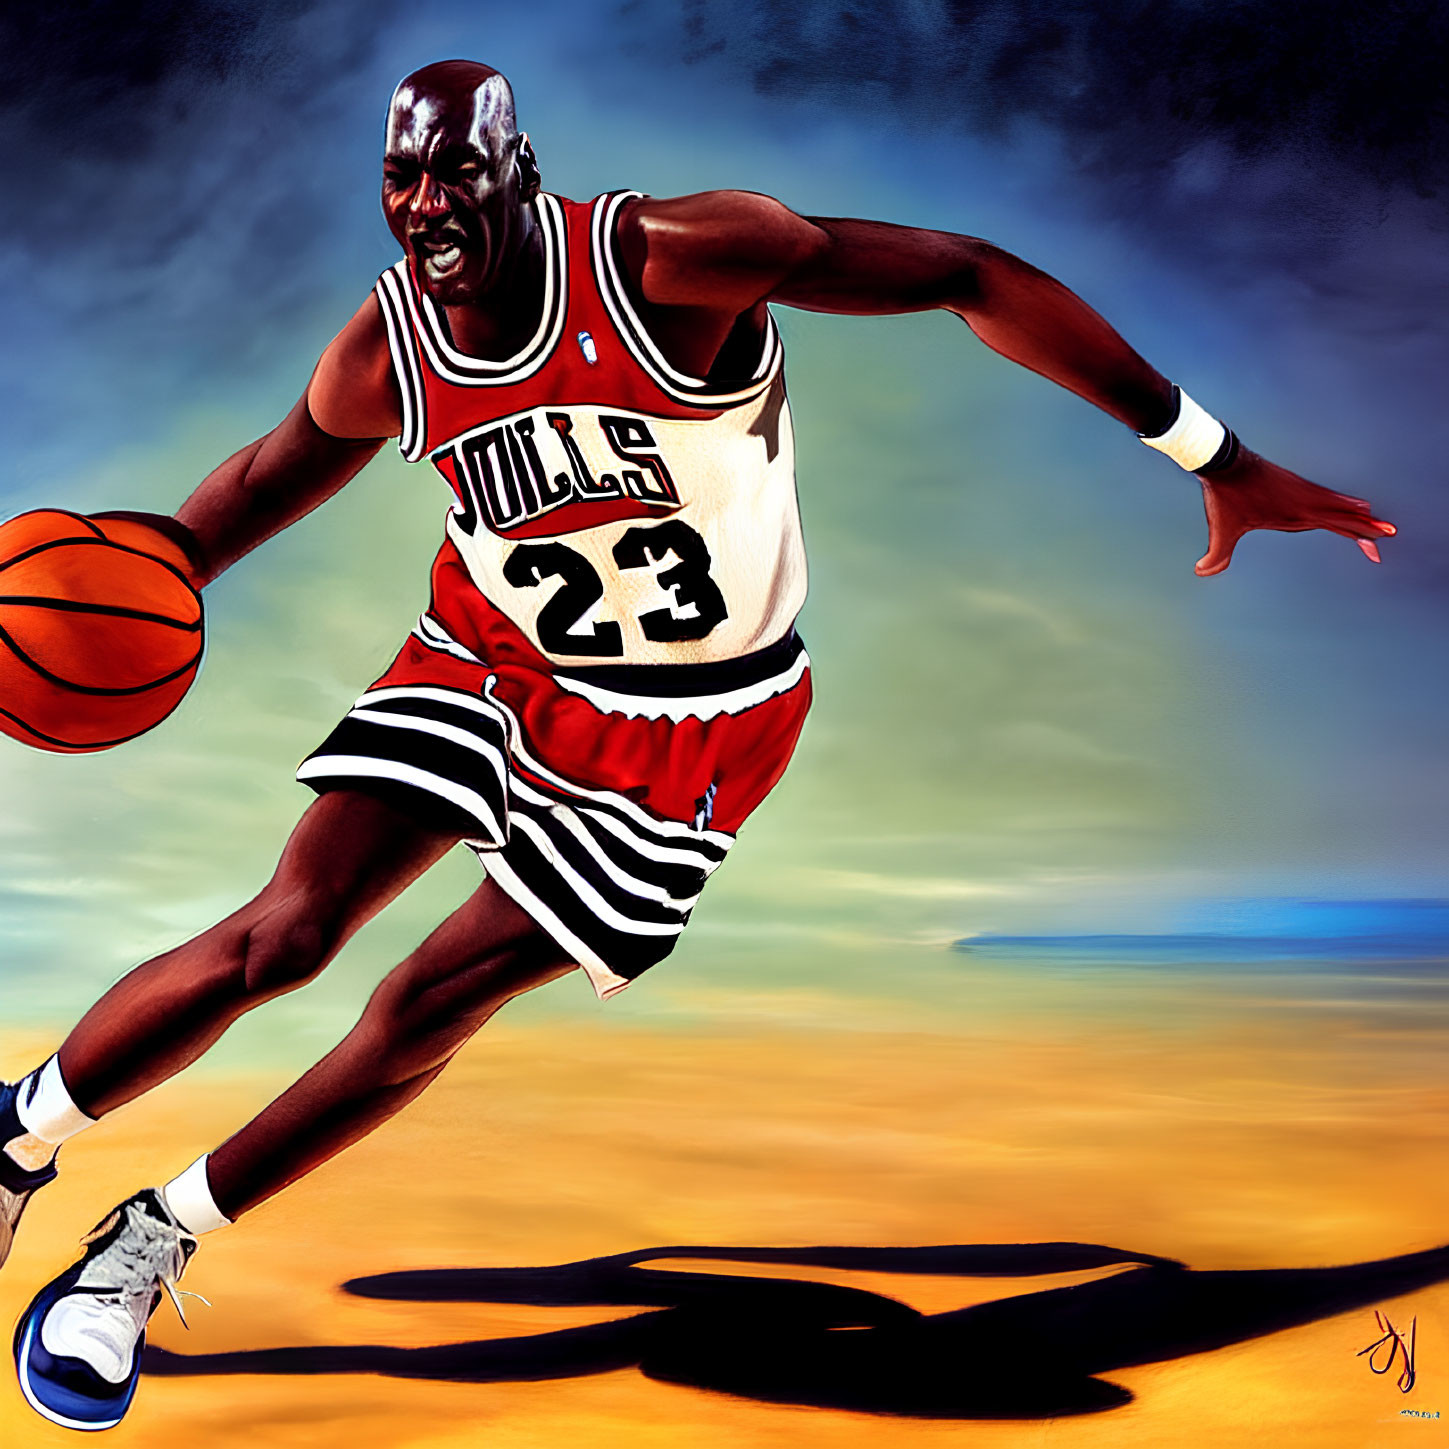 Vibrant basketball player in red Bulls #23 jersey dribbling under vivid sky